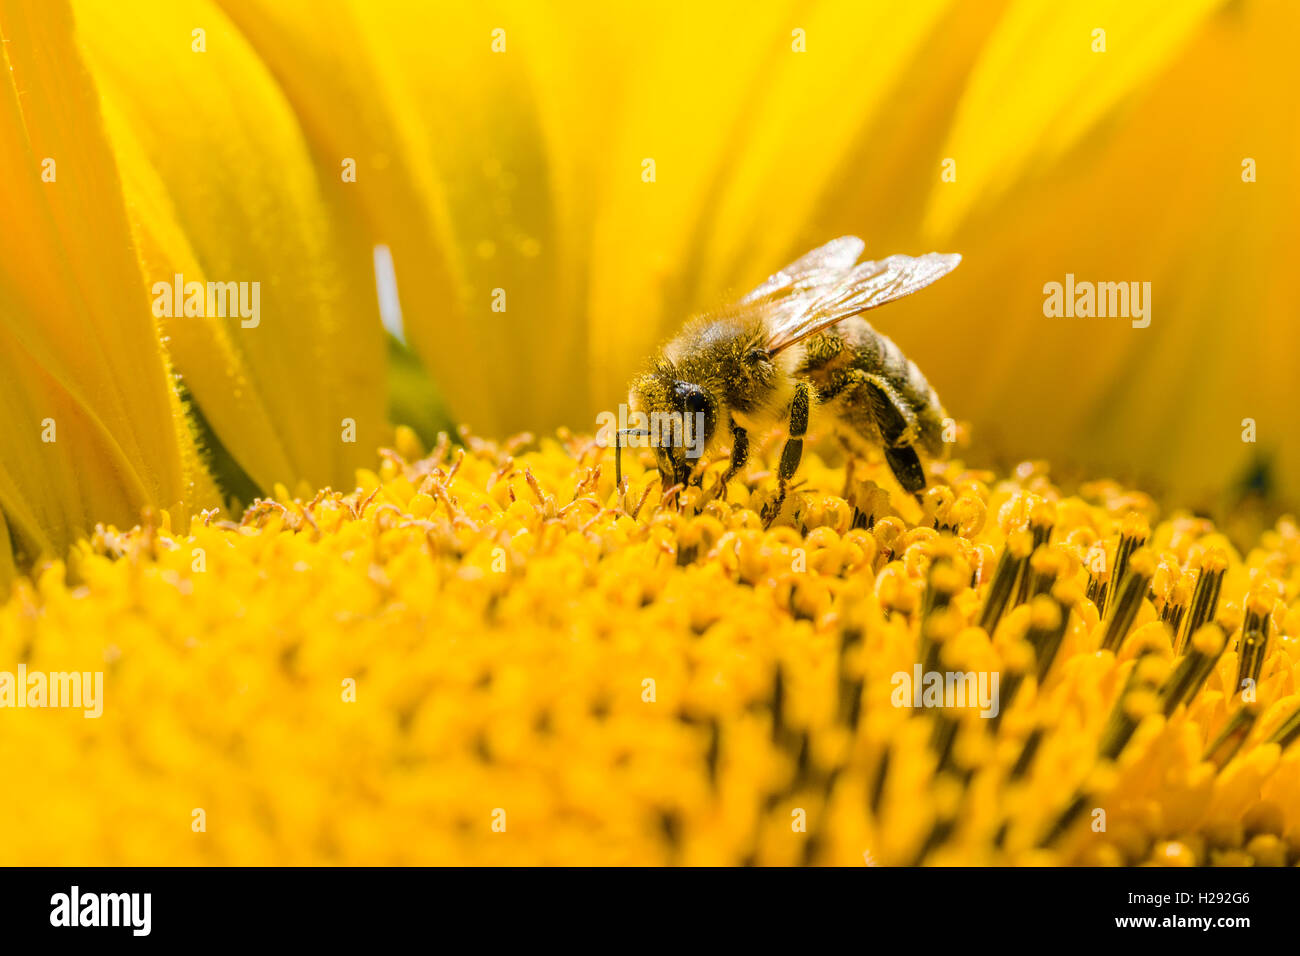 Carniolan de abejas (Apis mellifera Carnica) está recogiendo néctar en un común de girasol (Helianthus annuus) Flor, Sajonia Foto de stock